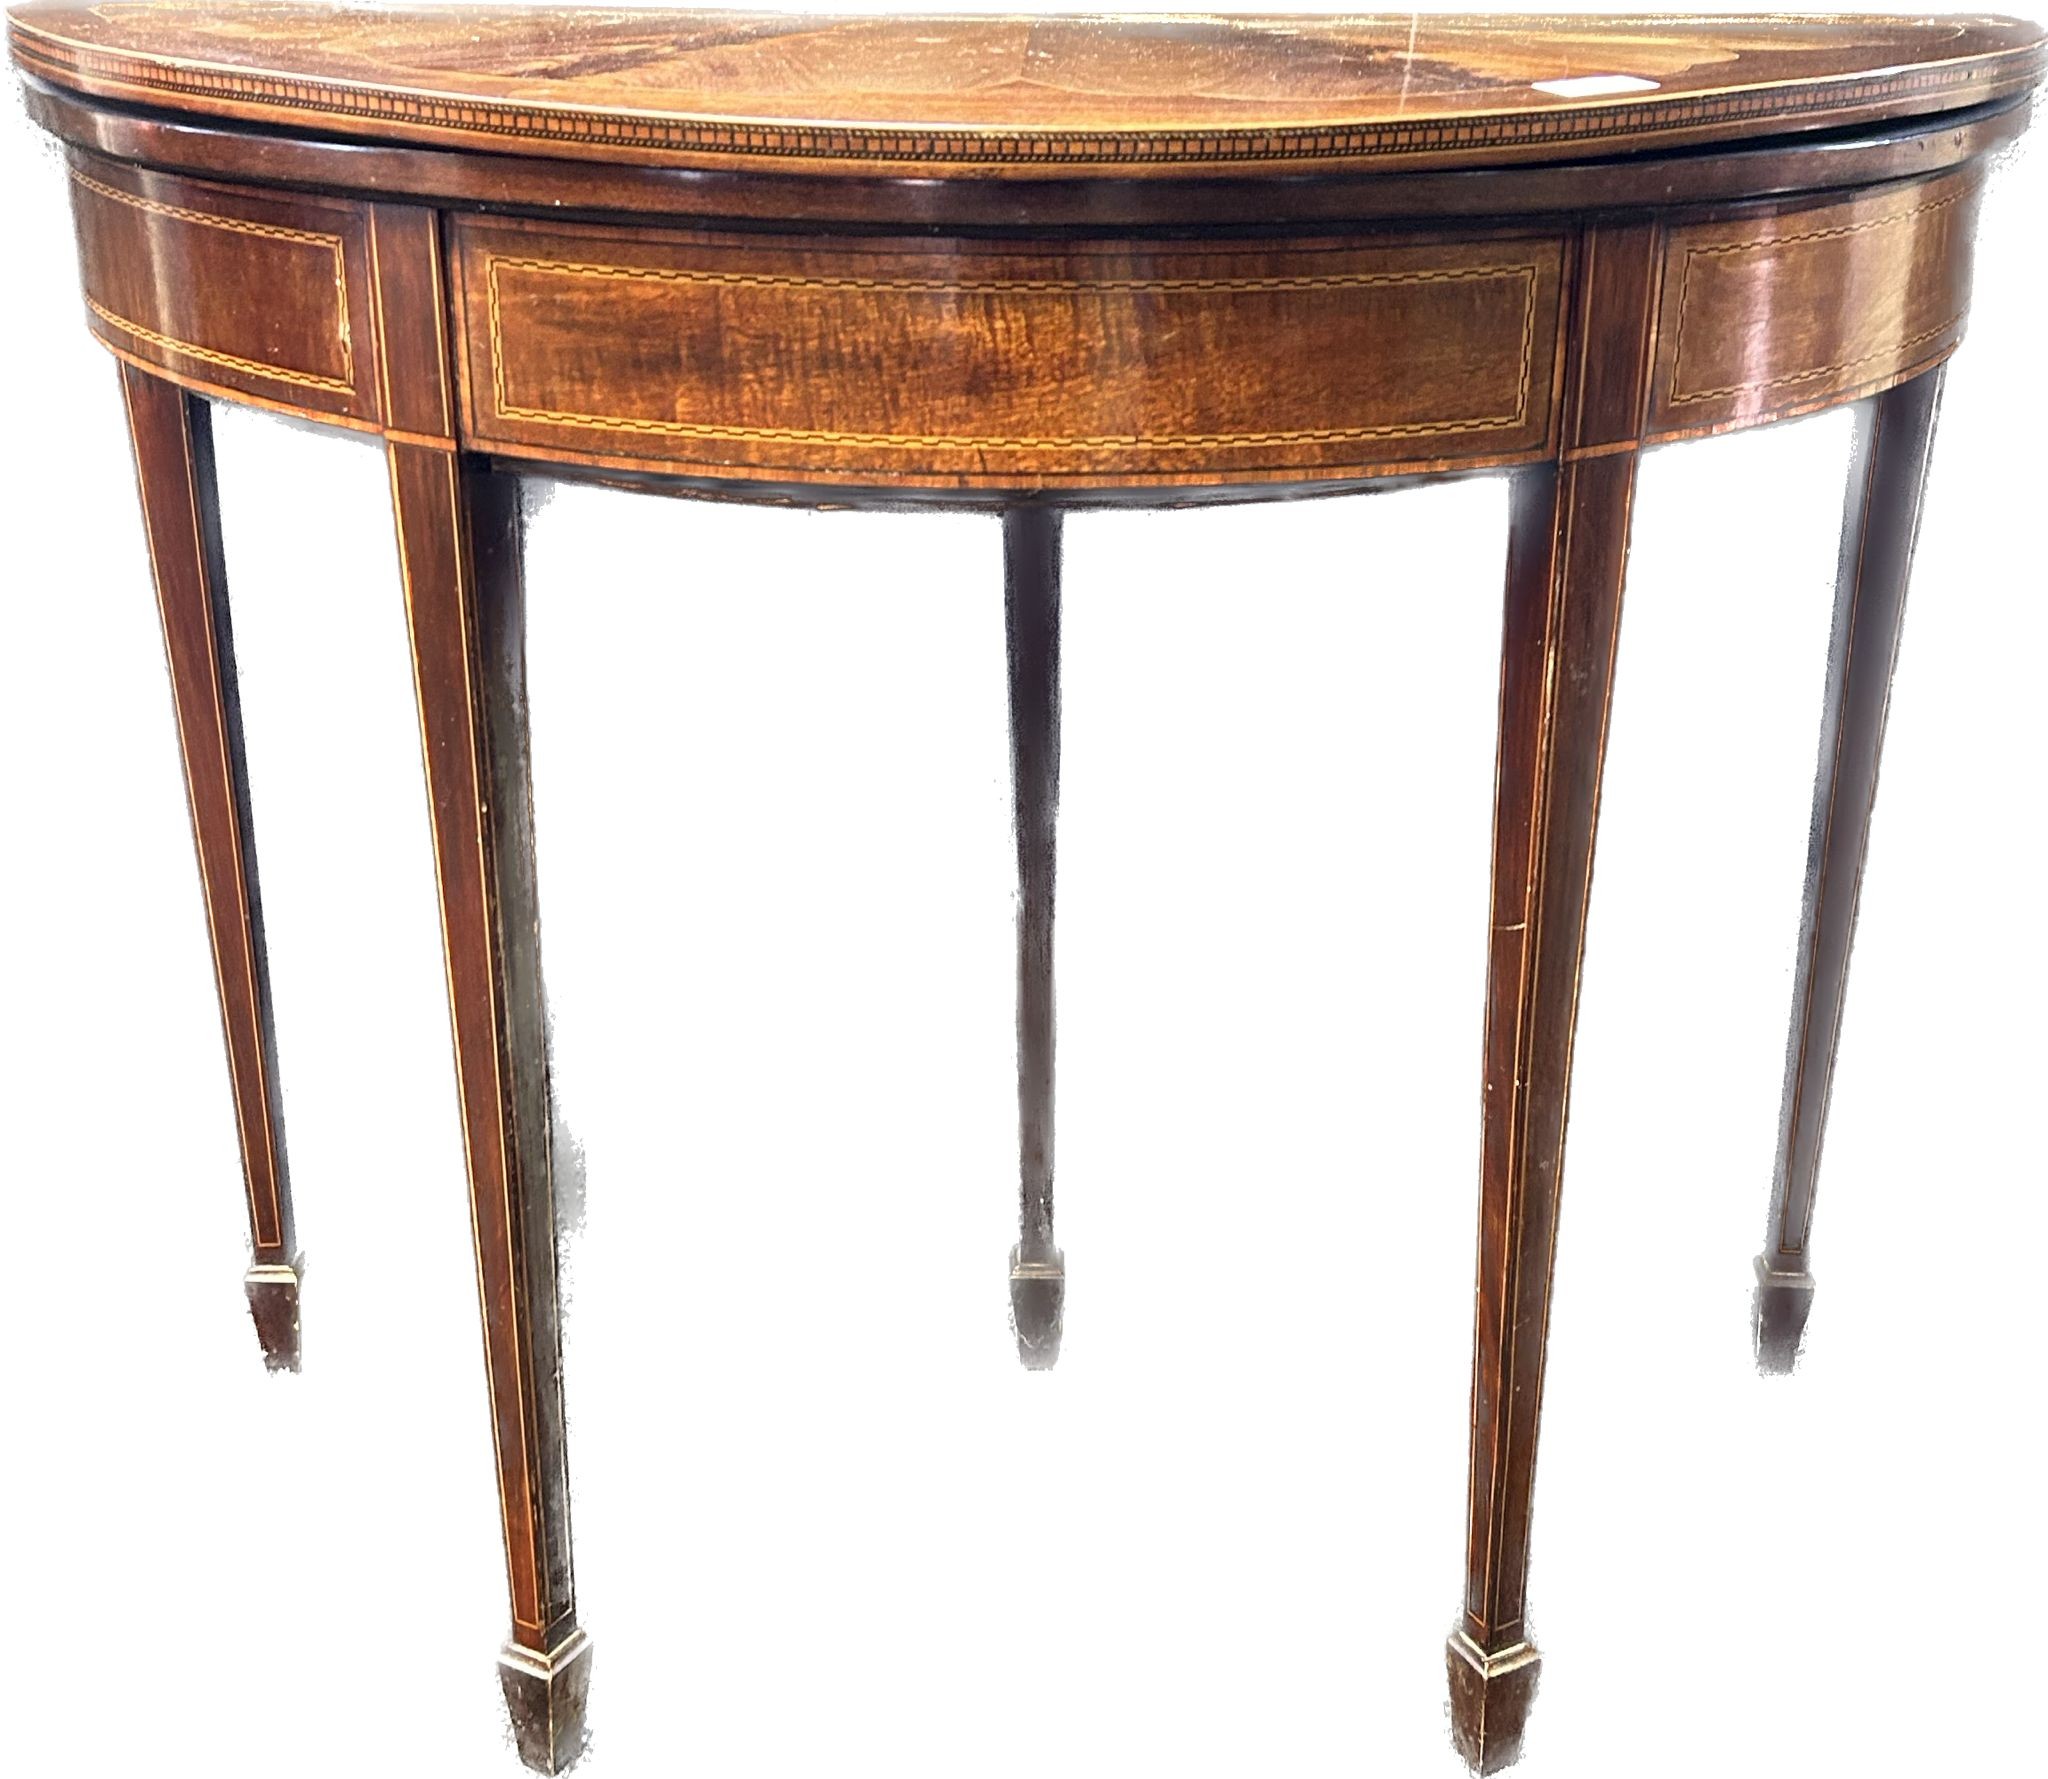 19th century mahogany half moon flip top table, raised on square tapered legs [72.5x91cm] - Image 2 of 3